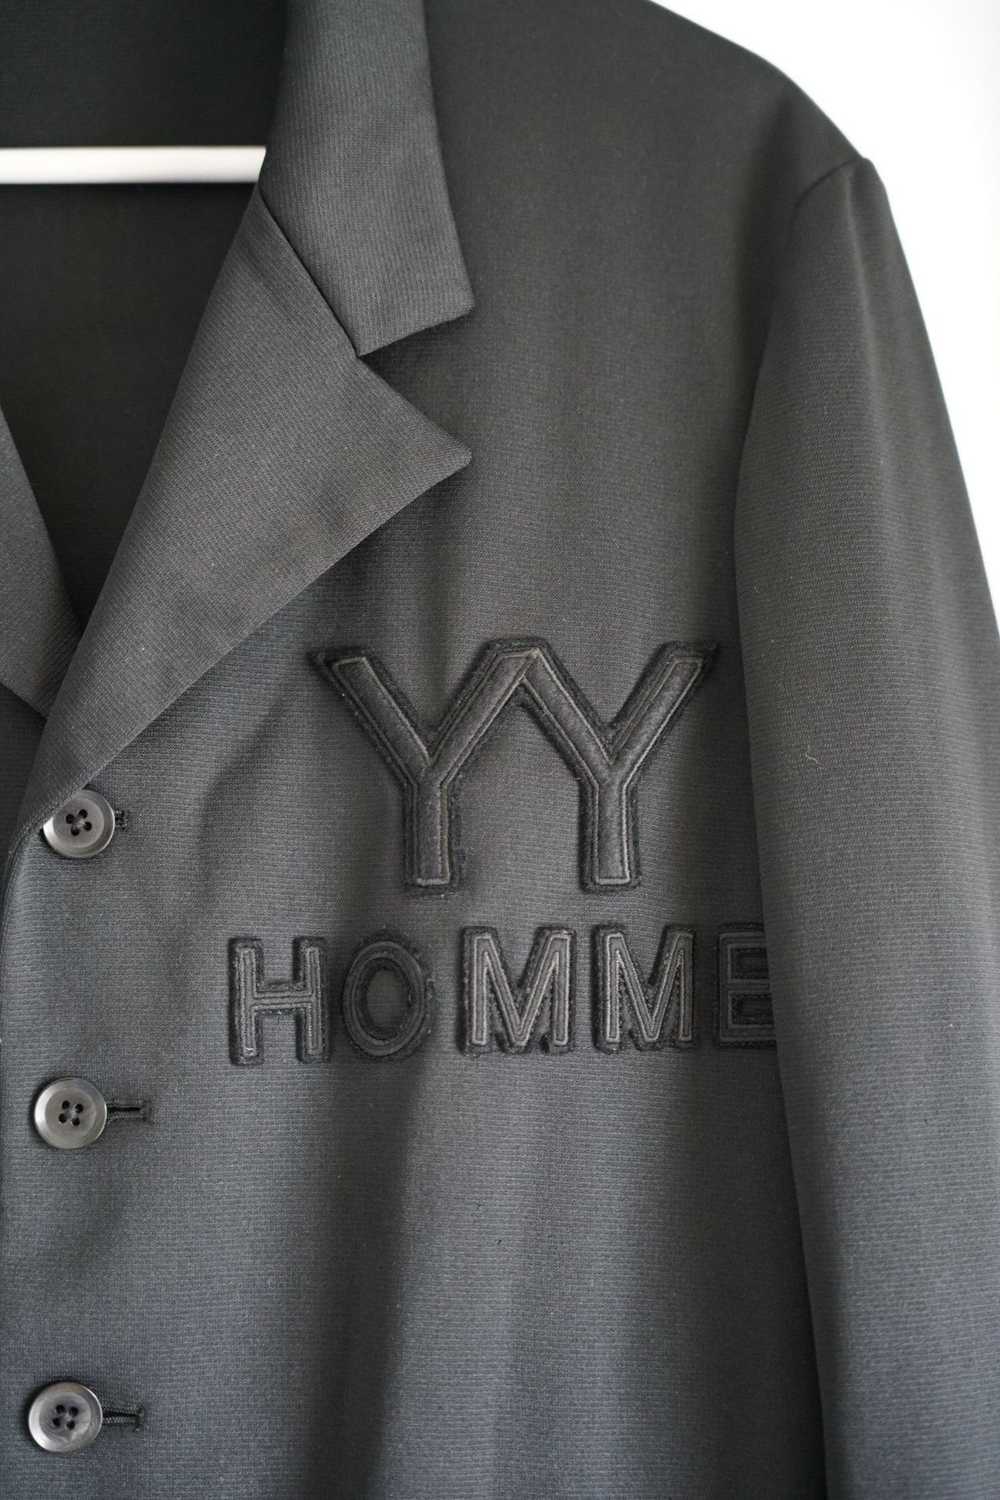 Yohji Yamamoto 03ss Number 20 Embroidered Suit - image 3